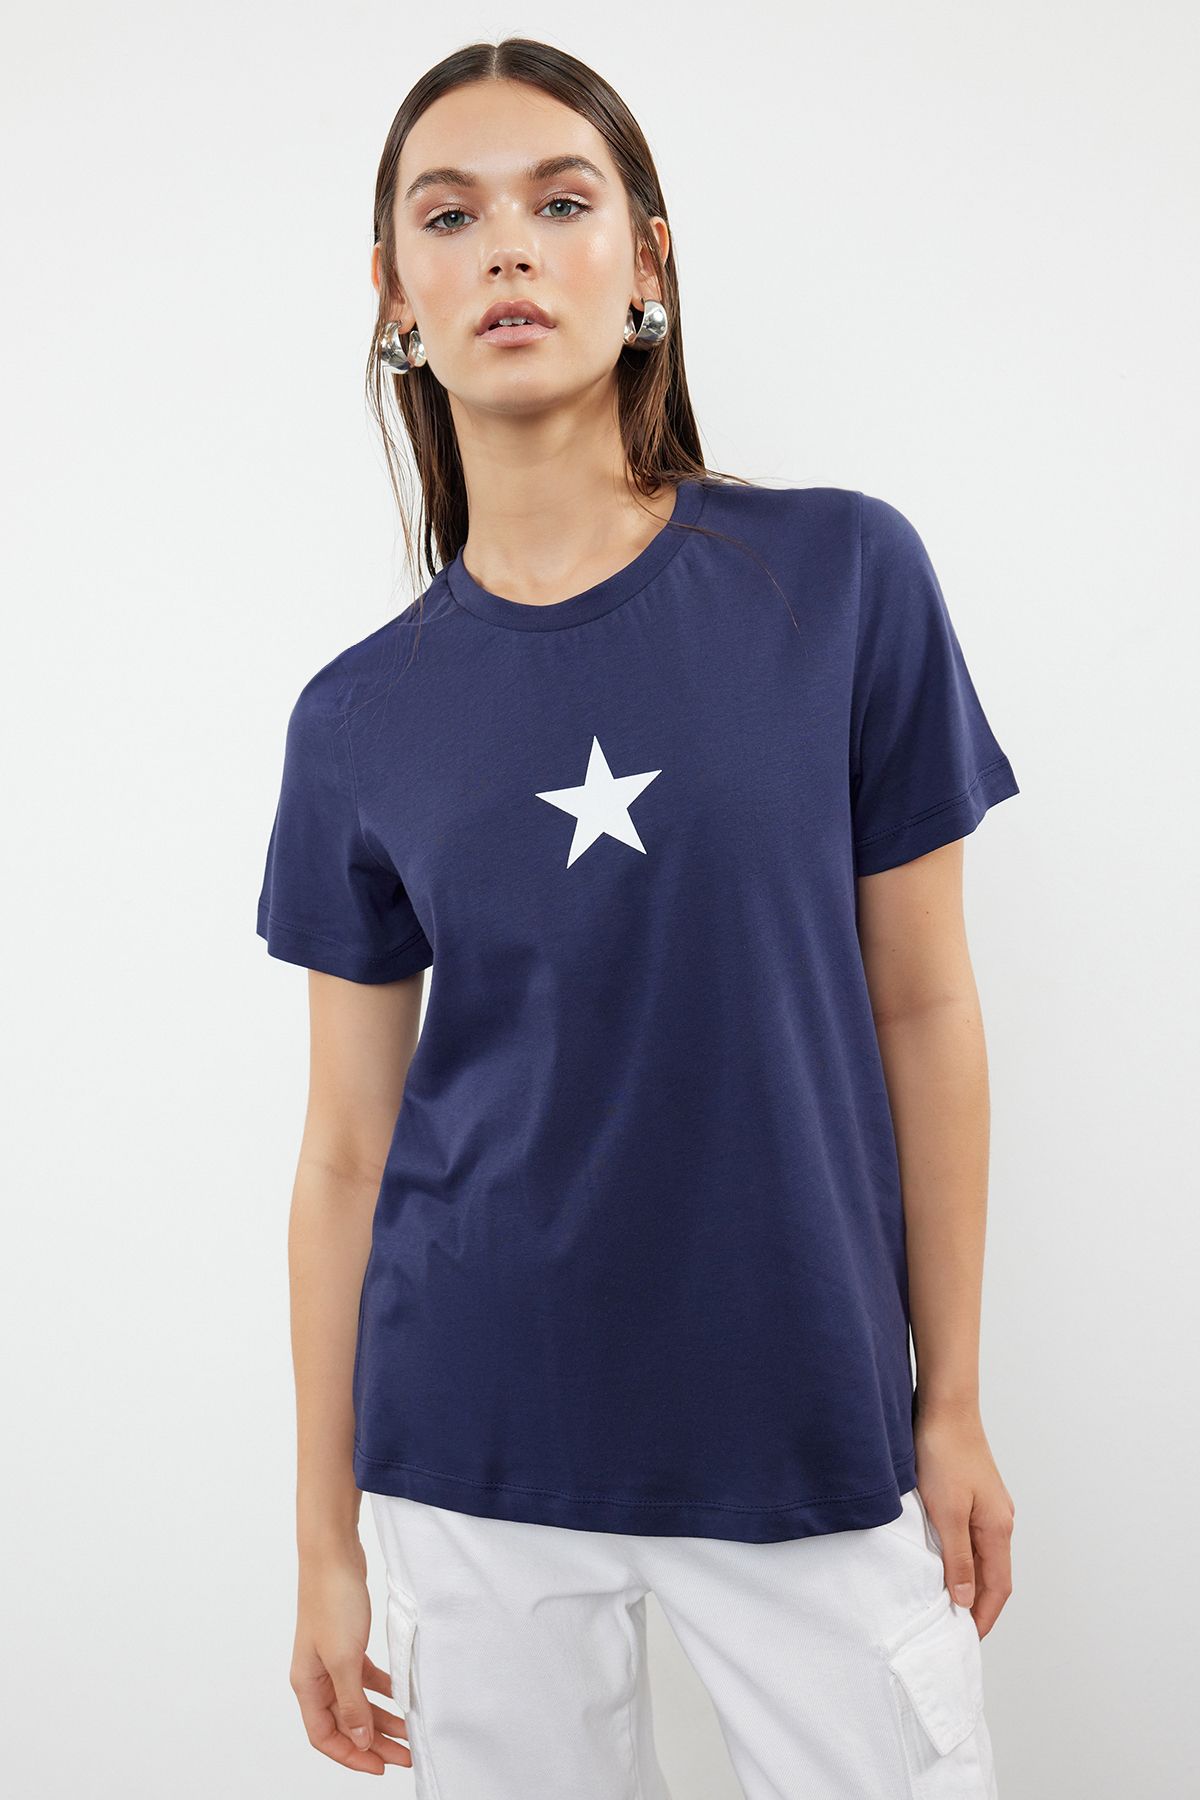 Trendyol Navy Blue 100% Cotton Star Printed Regular/Normal Pattern Crew Neck Knitted T-Shirt